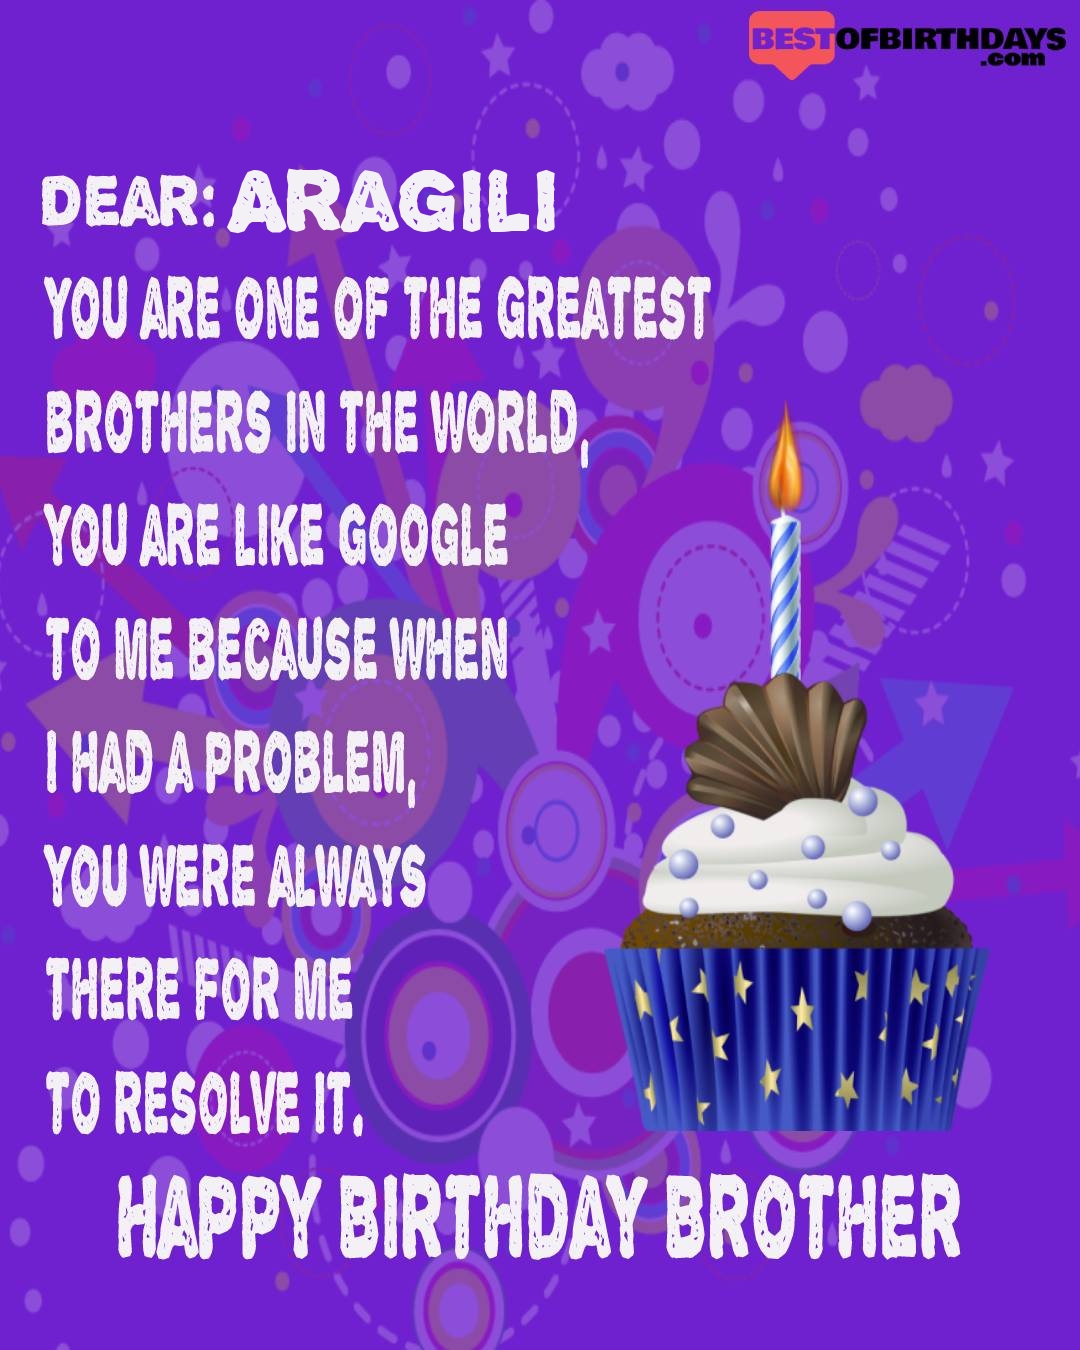 Happy birthday aragili bhai brother bro